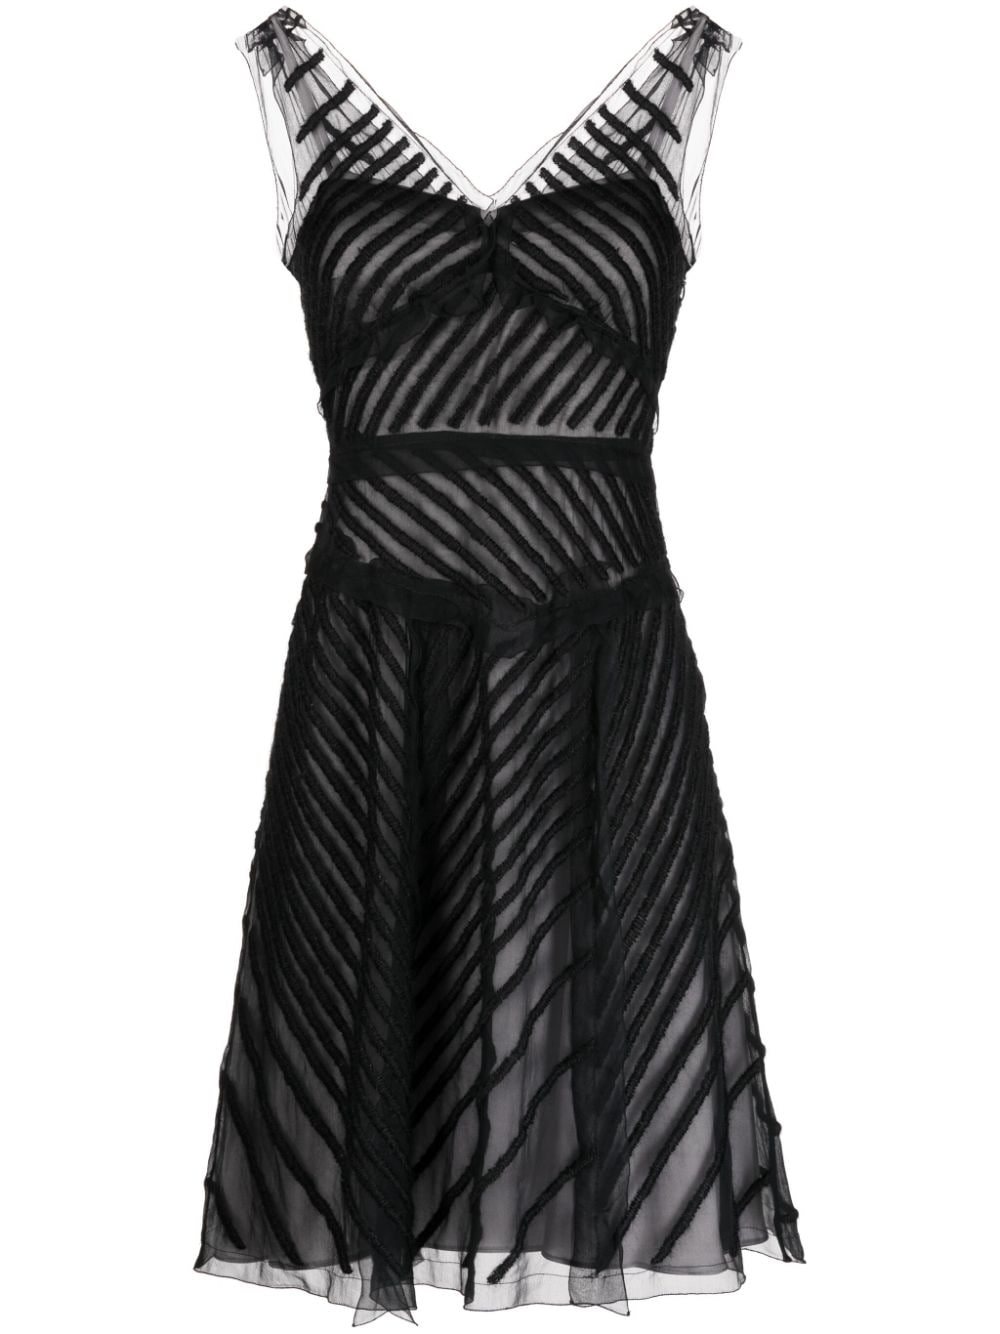 Prada Pre-Owned embroidered flared silk dress - Black